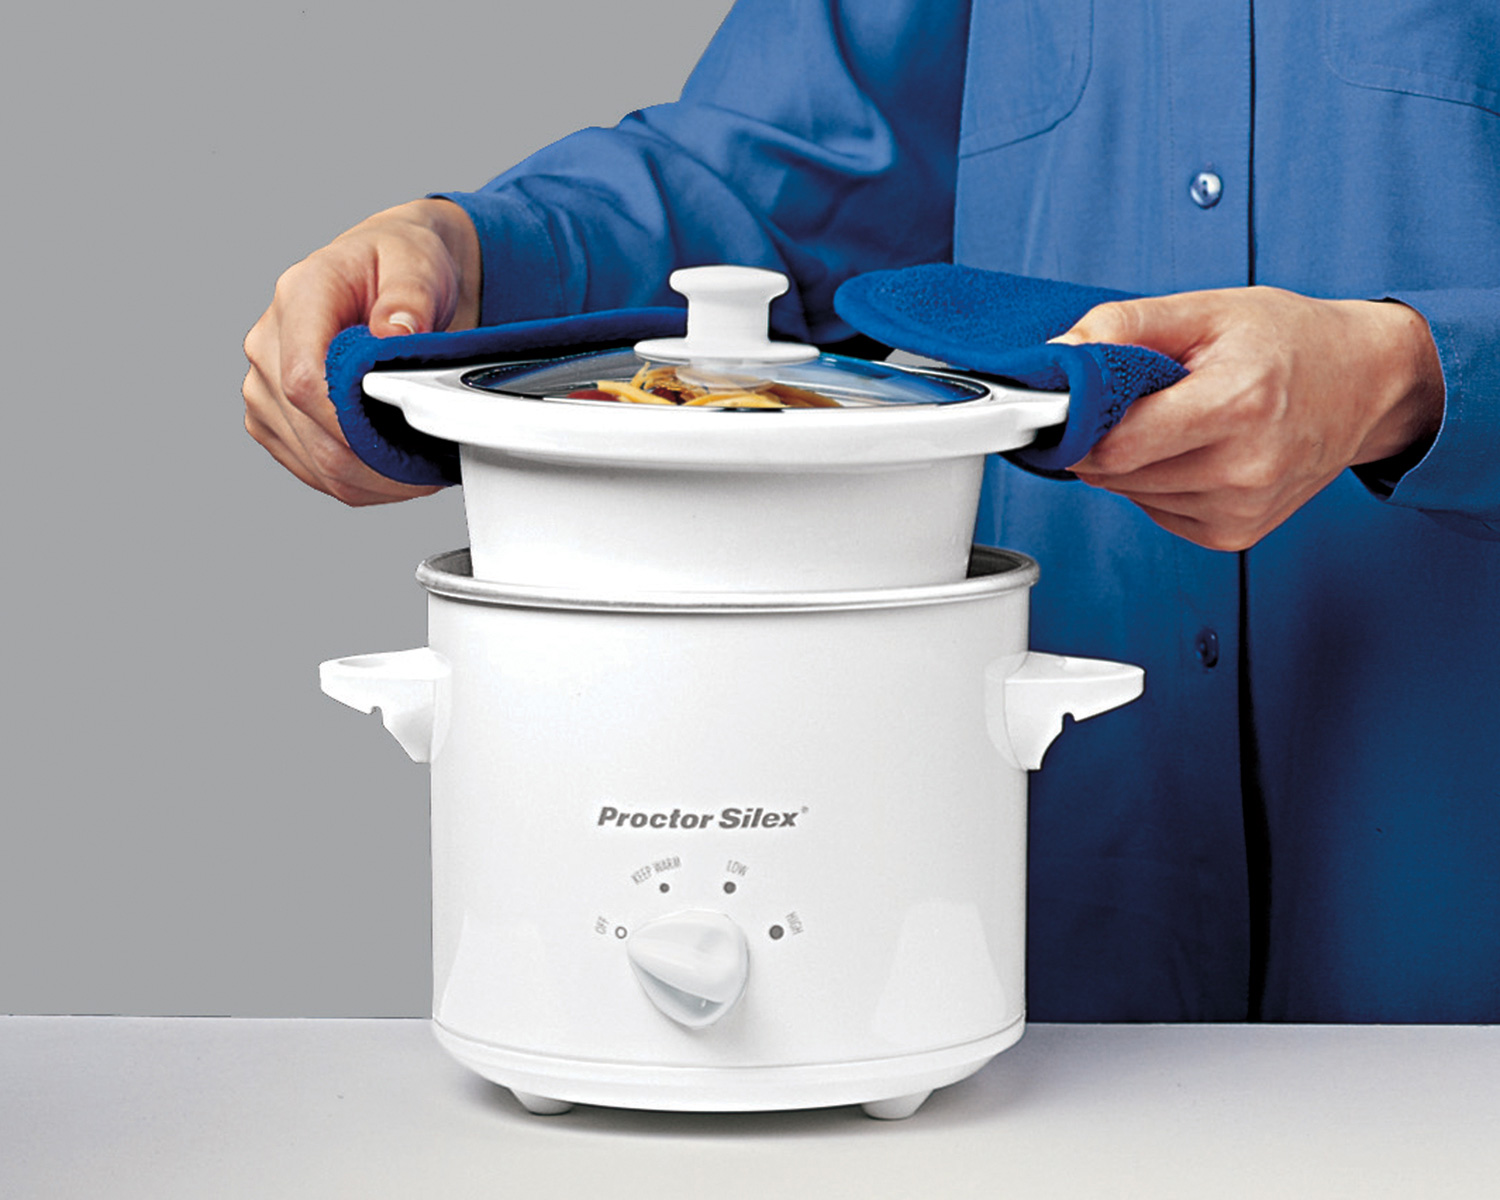 Proctor Silex 1.5 Quart Slow Cooker